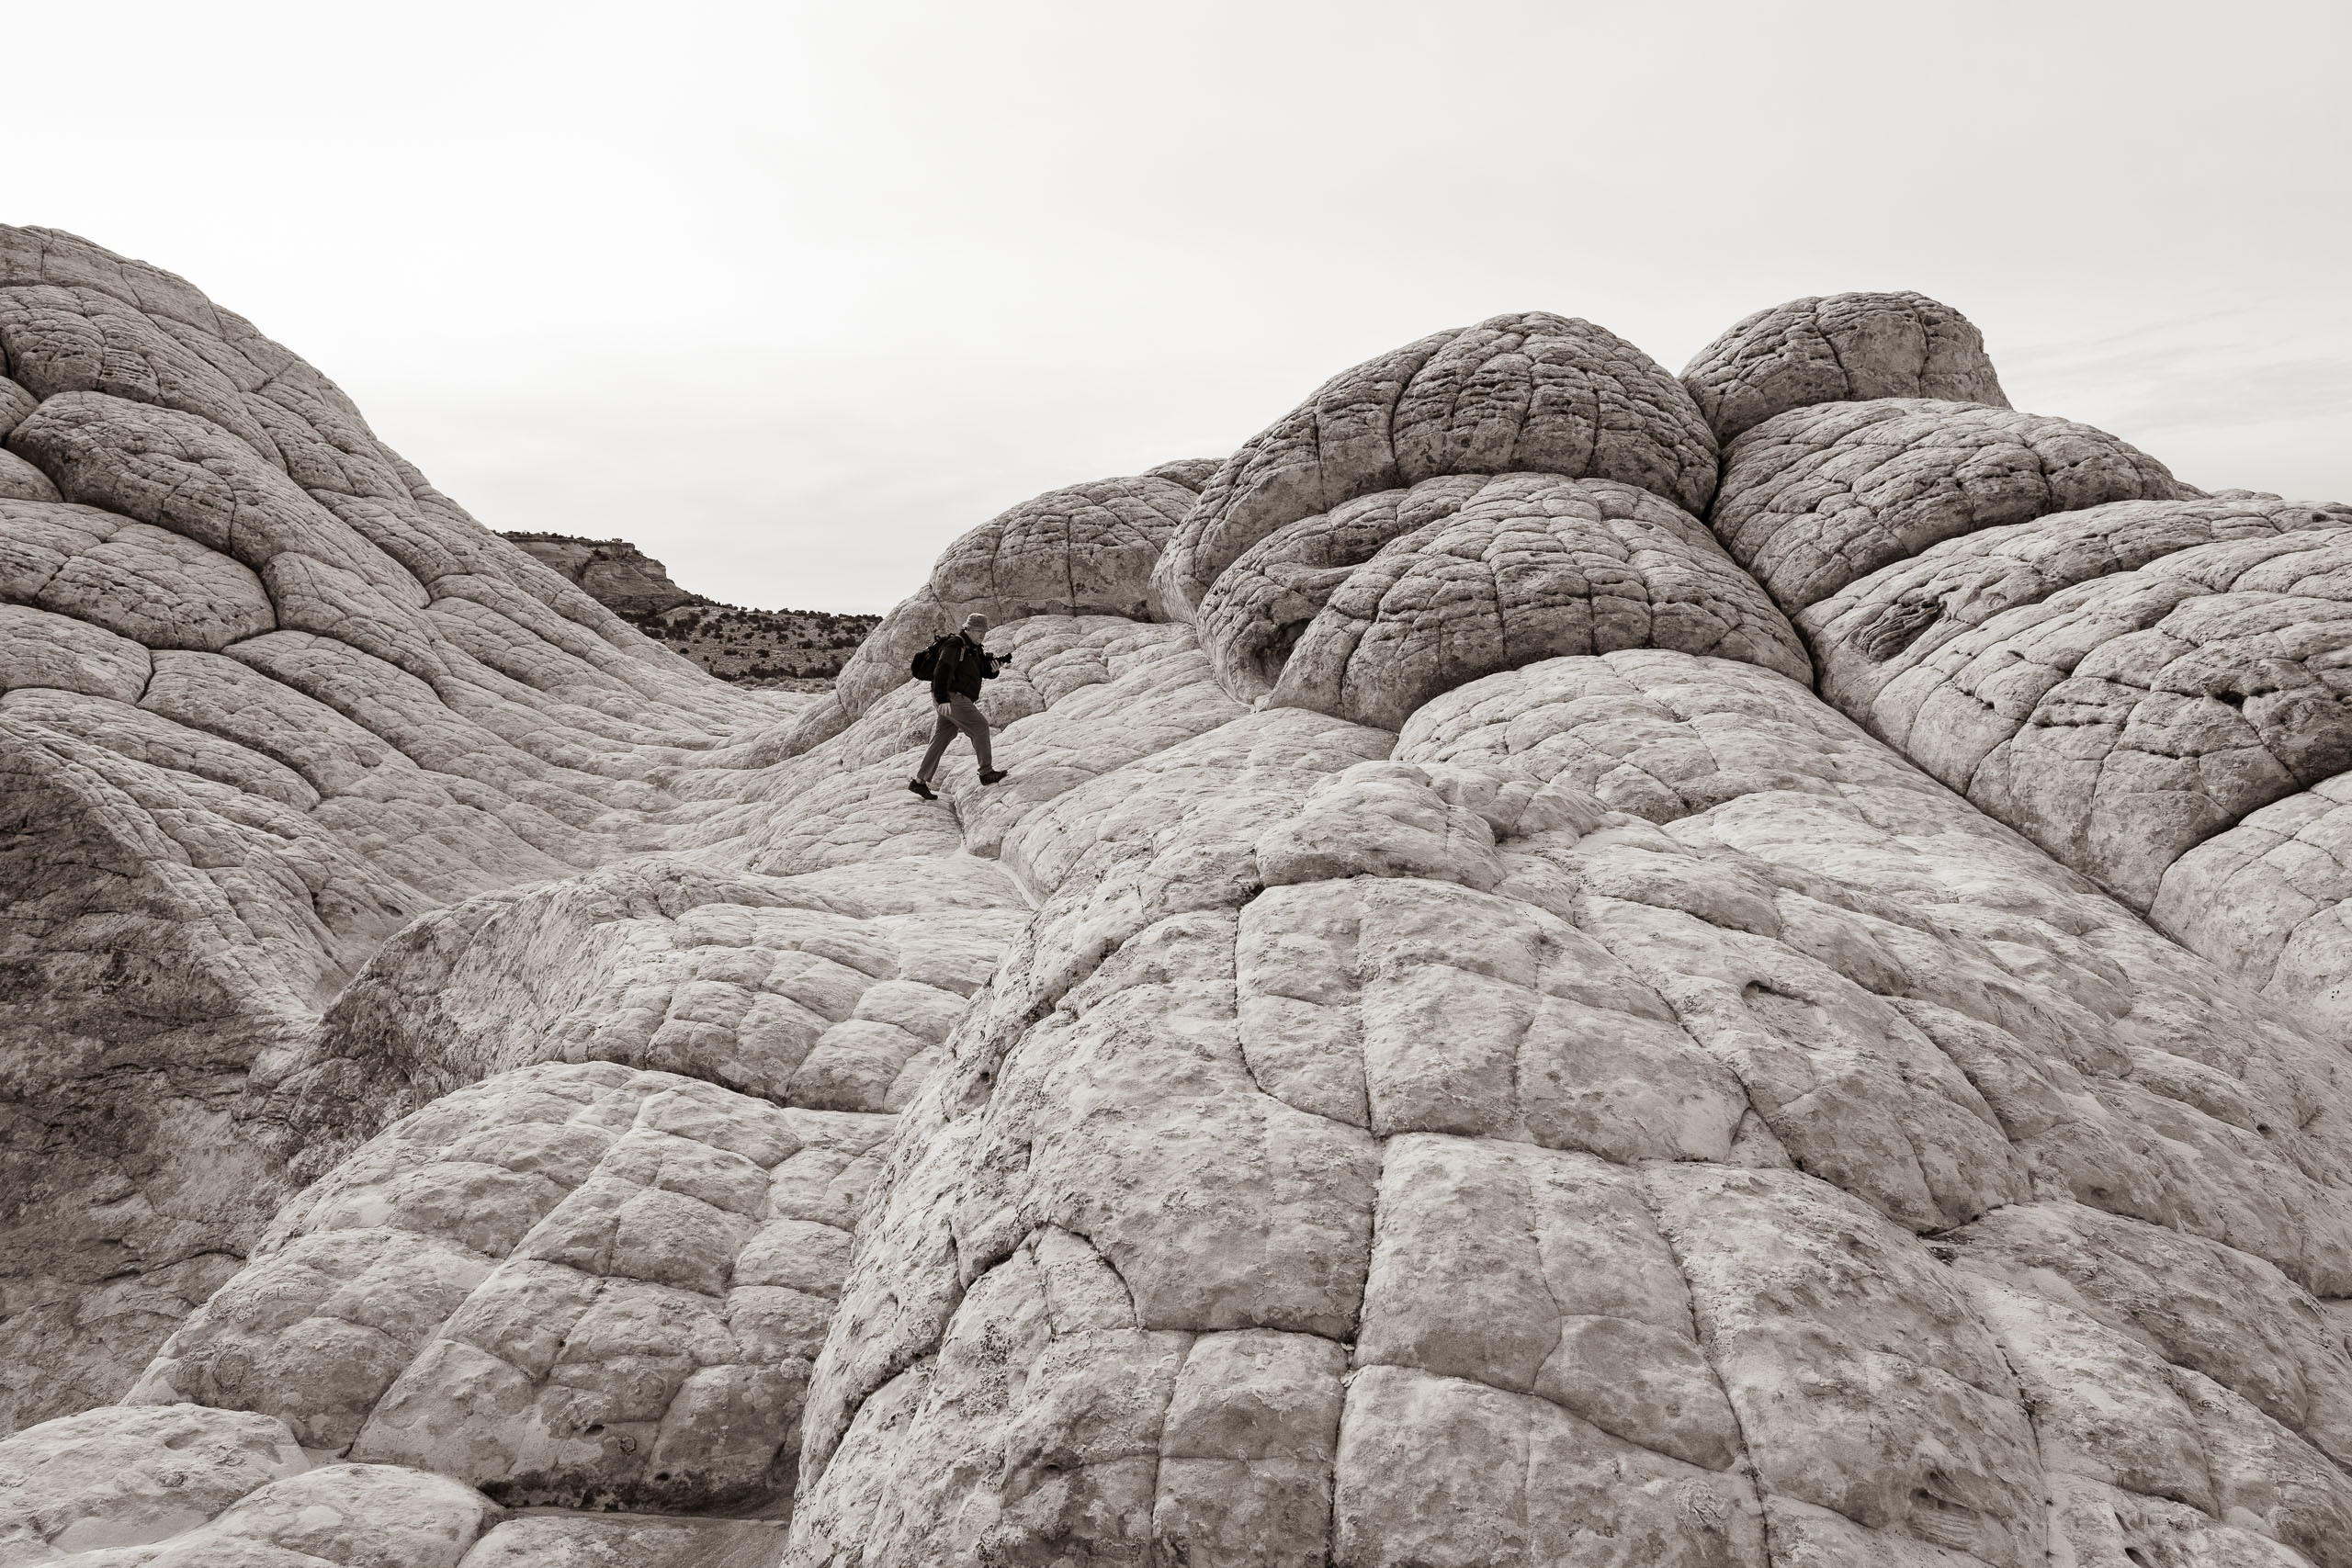 Jonathan hops across the "brain rock" at White Pocket, Arizona.